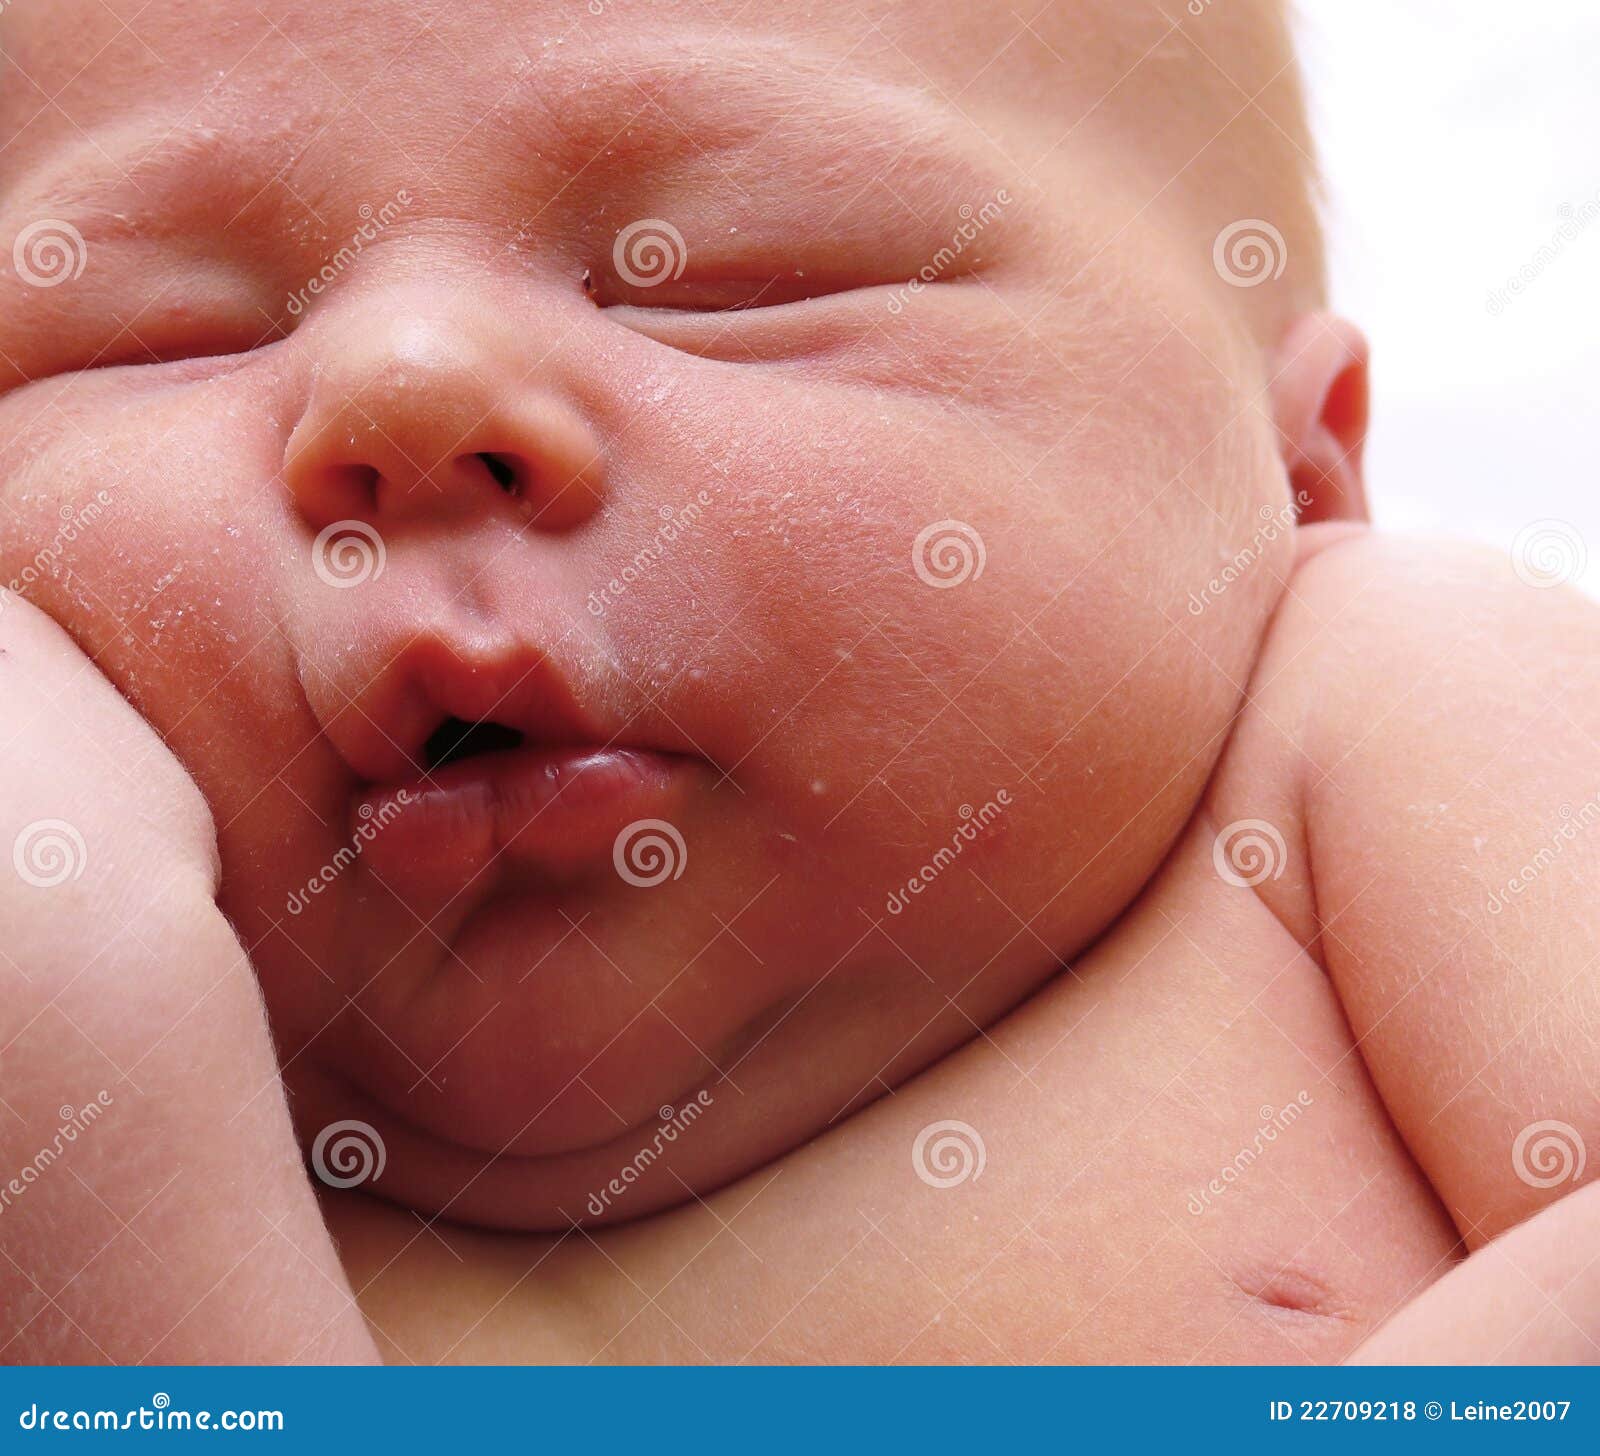 chubby newborn infant